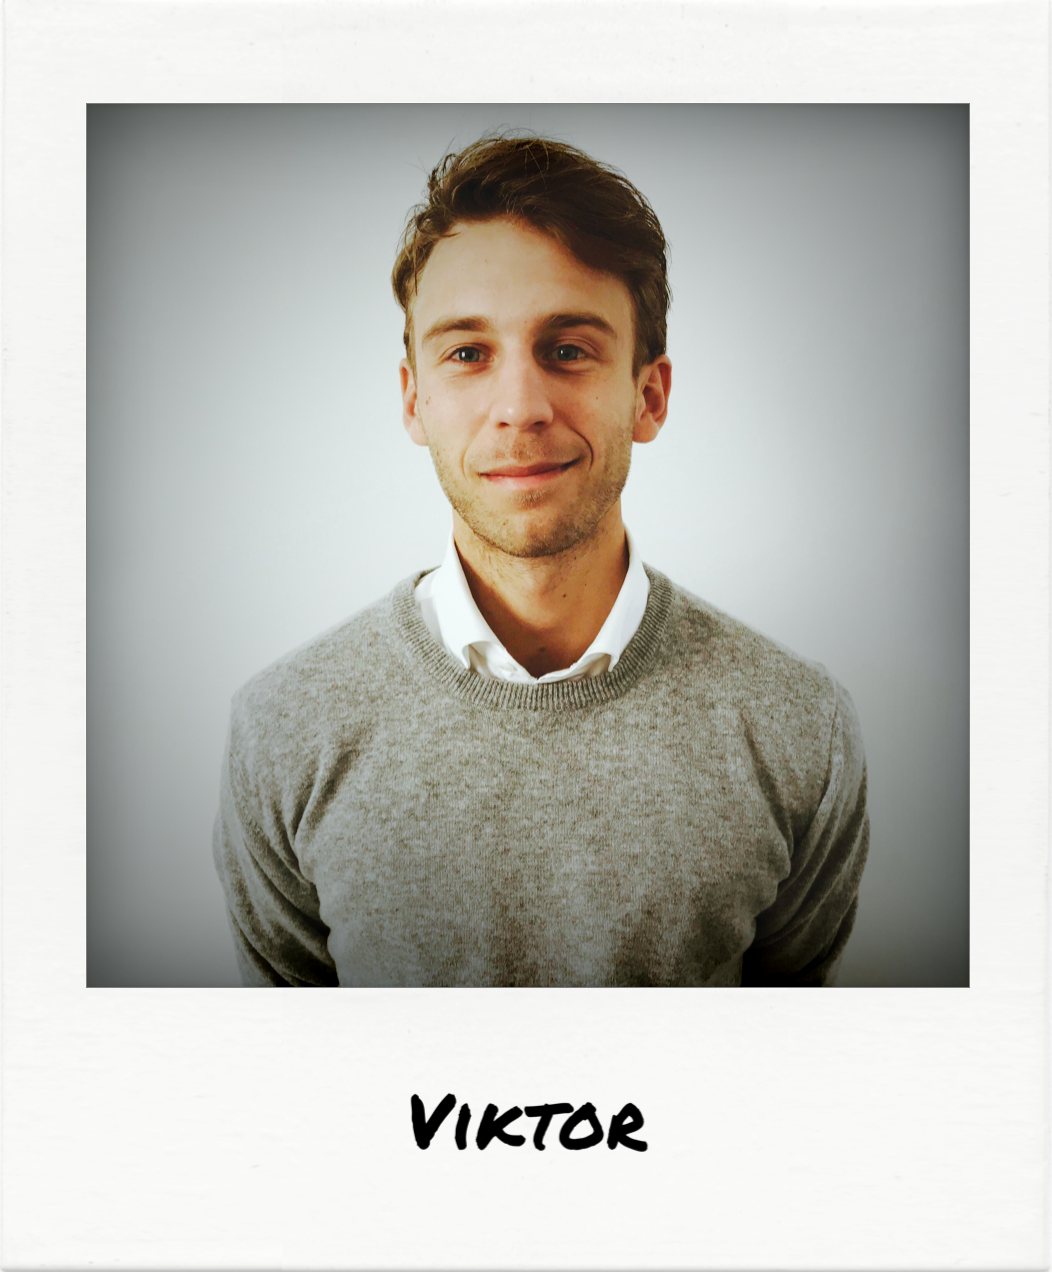 Victor, 22, studies IMK at CBS